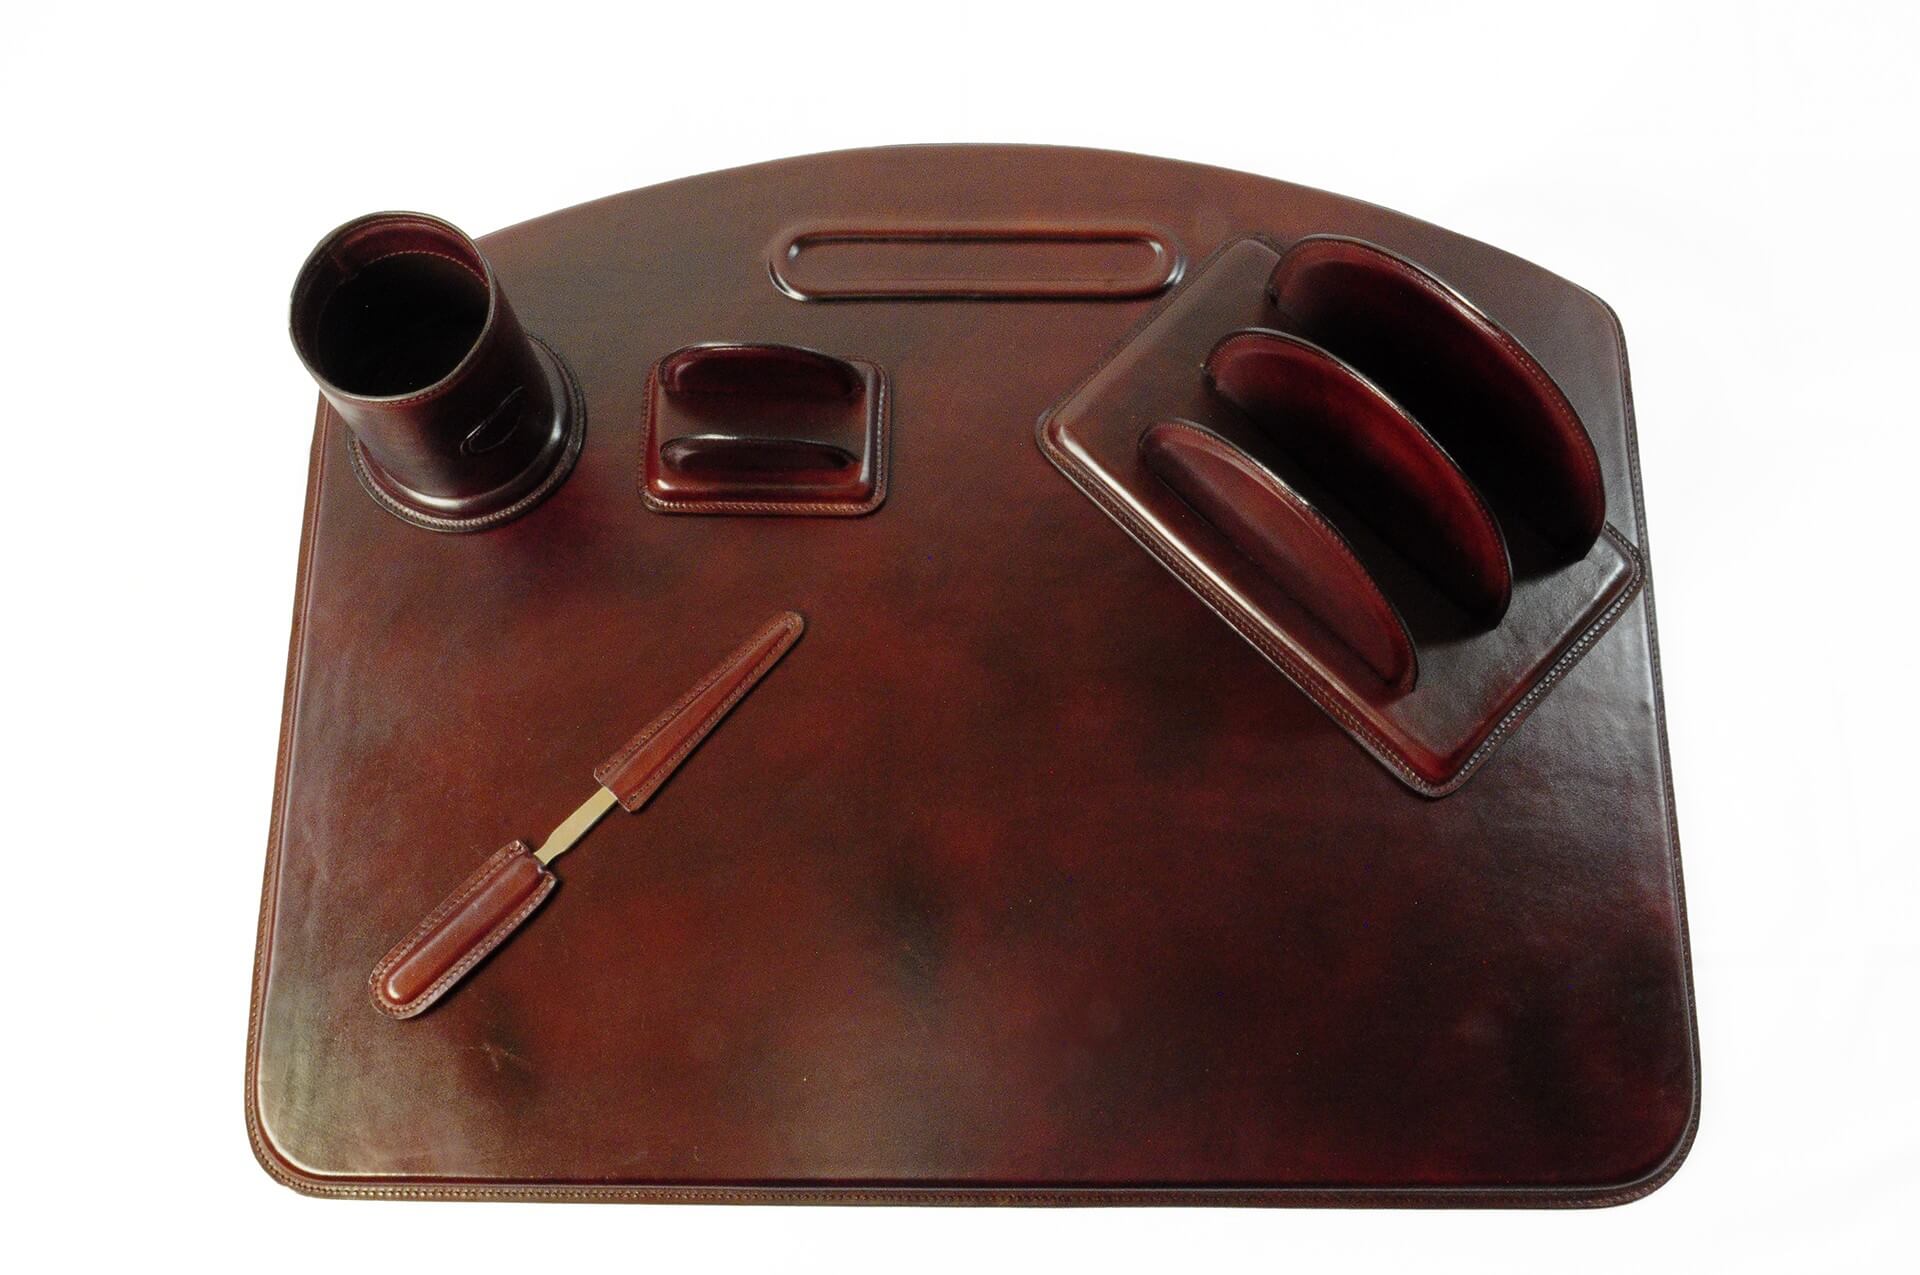 Set de bureau en cuir marron - accessoires de bureau made in France